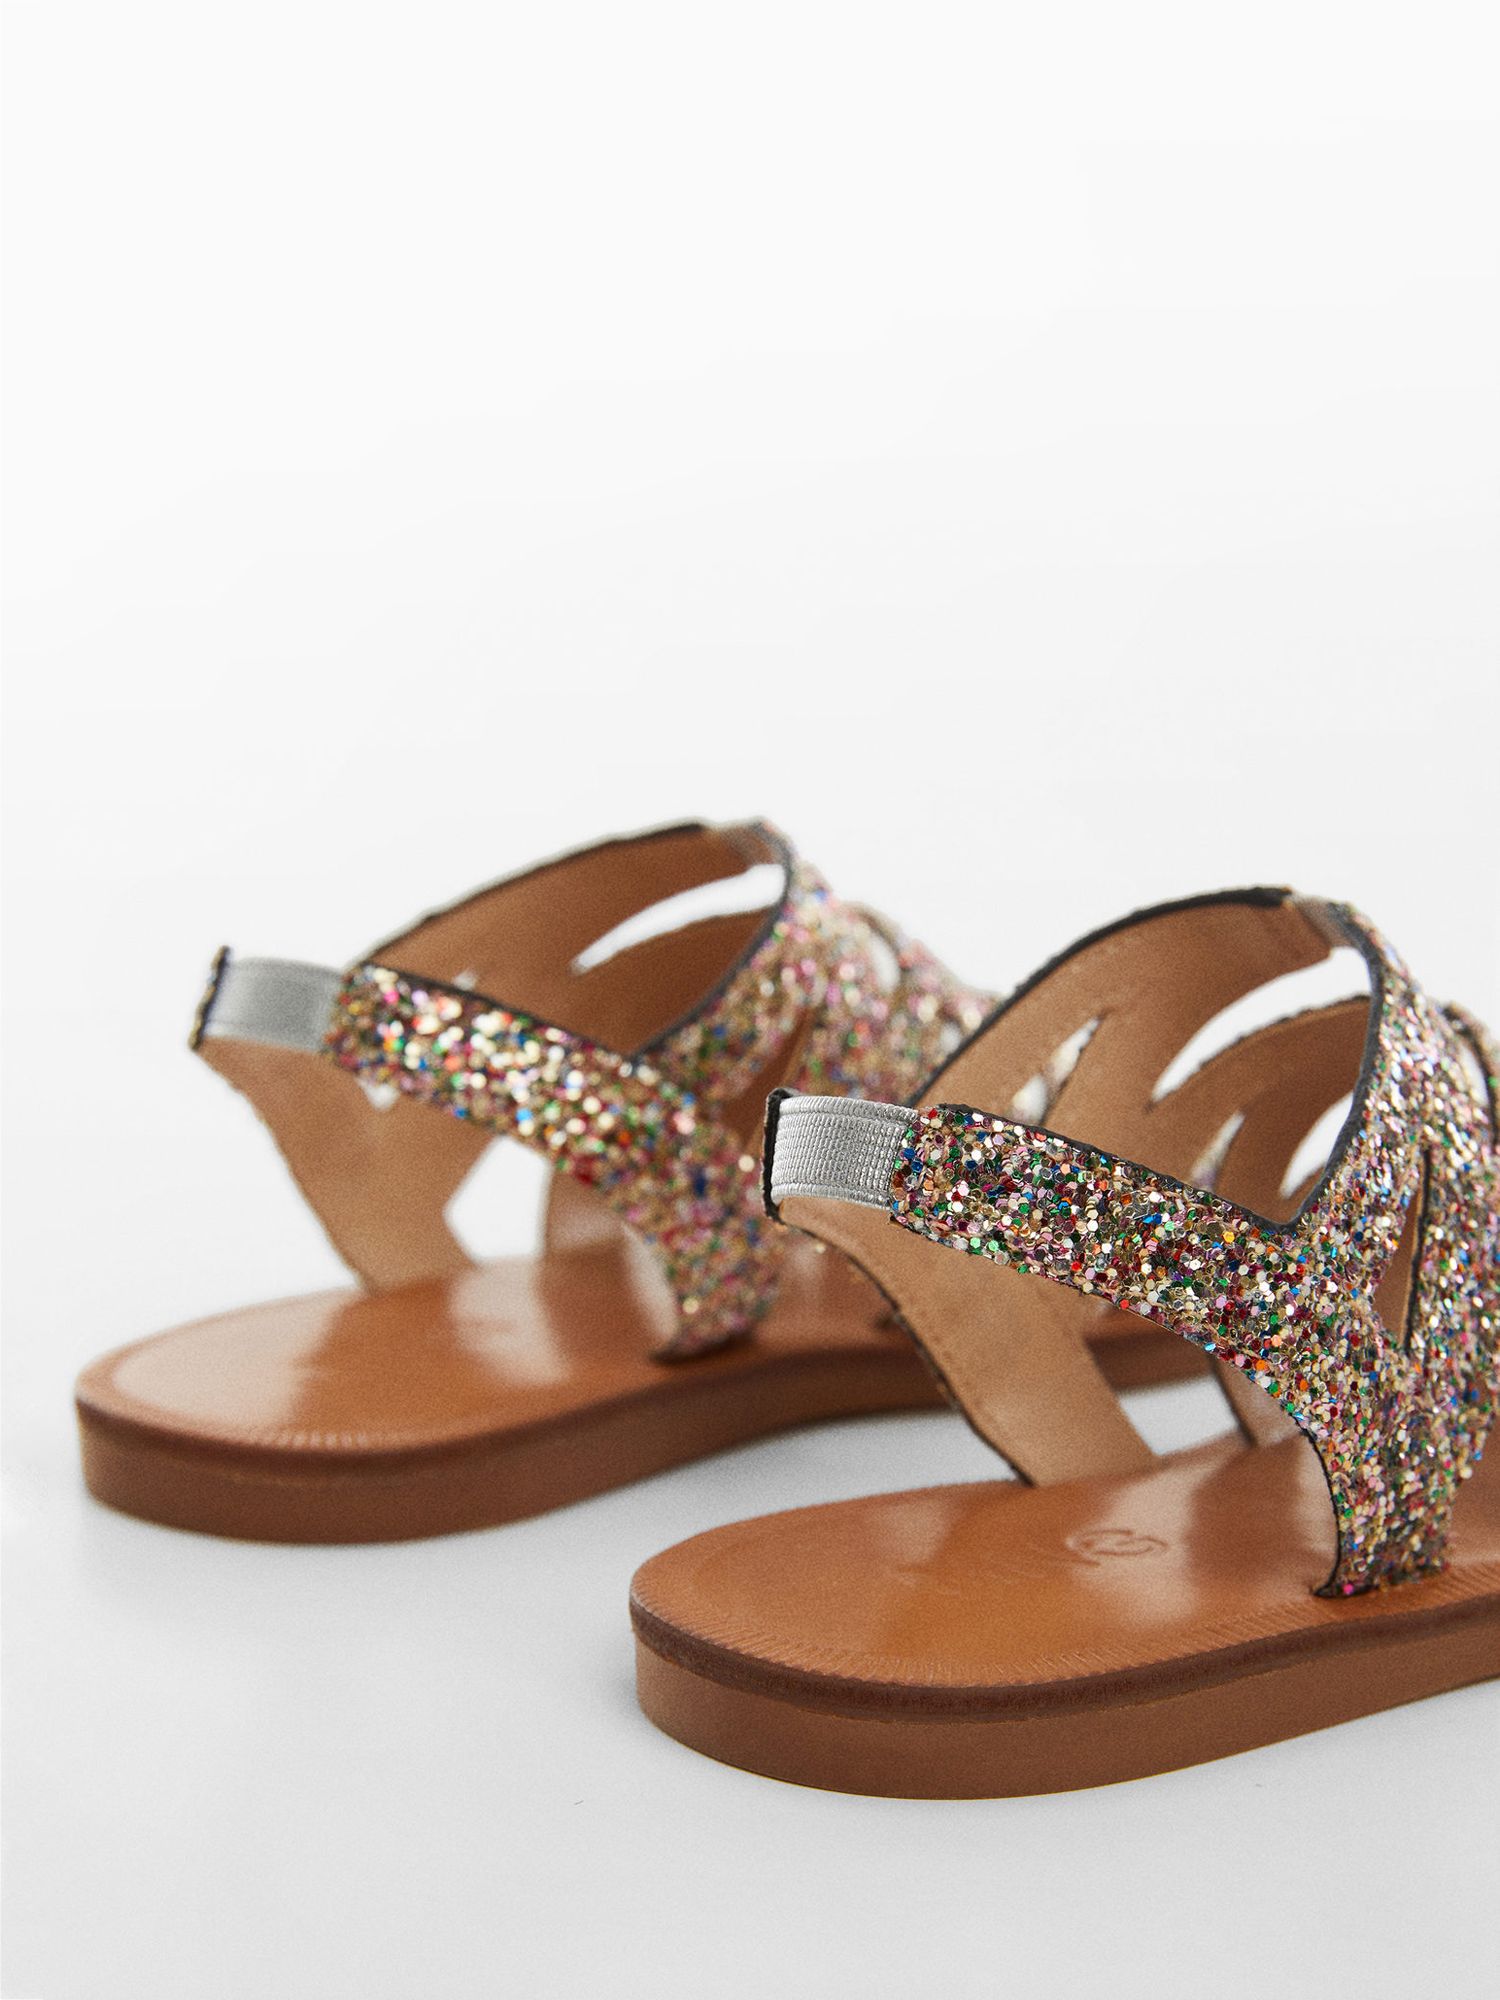 Mango Kids' Deme Glitter Strappy Sandals, Pink/Multi, 1